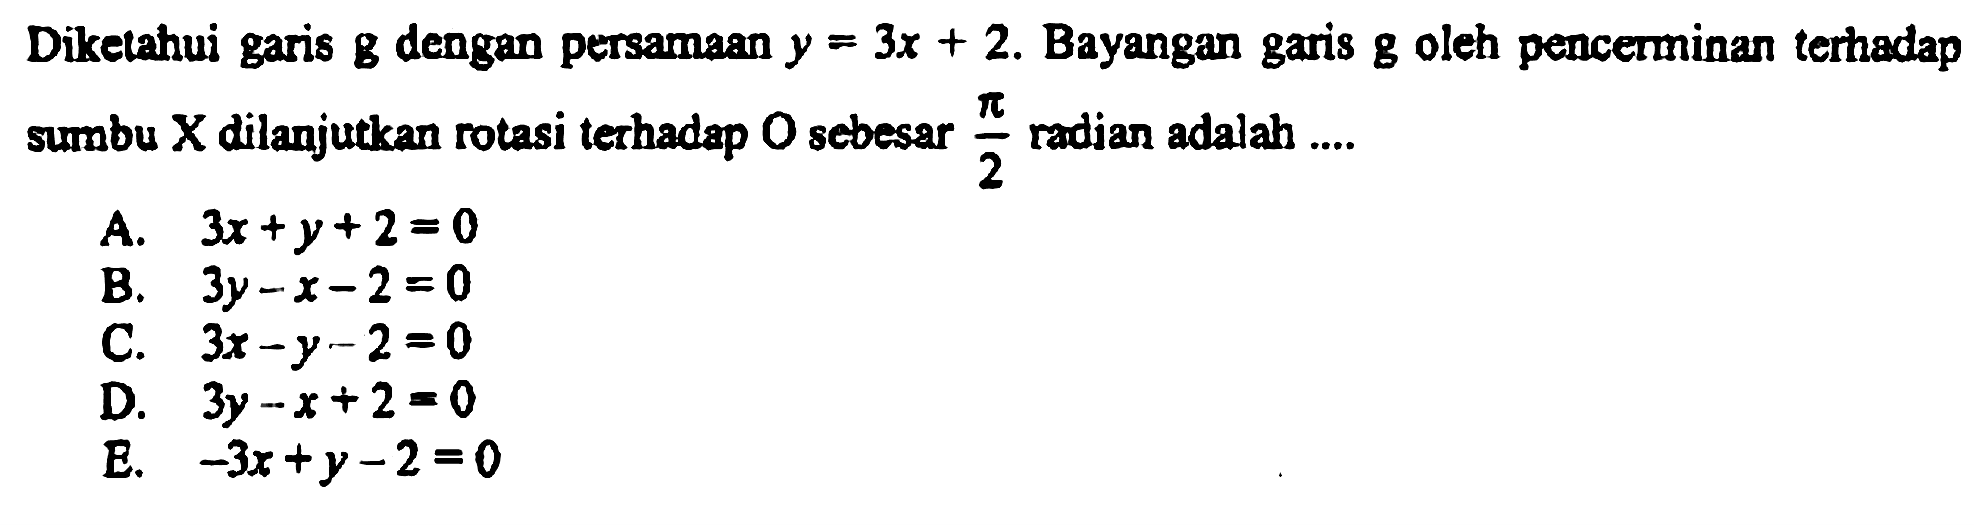 Diketahui garis  g  dengan persamaan  y=3x+2 . Bayangan garis  g  oleh pencerminan terhadap sumbu  X  dilanjutkan rotasi terhadap  O  sebesar  pi/2  radian adalah ....